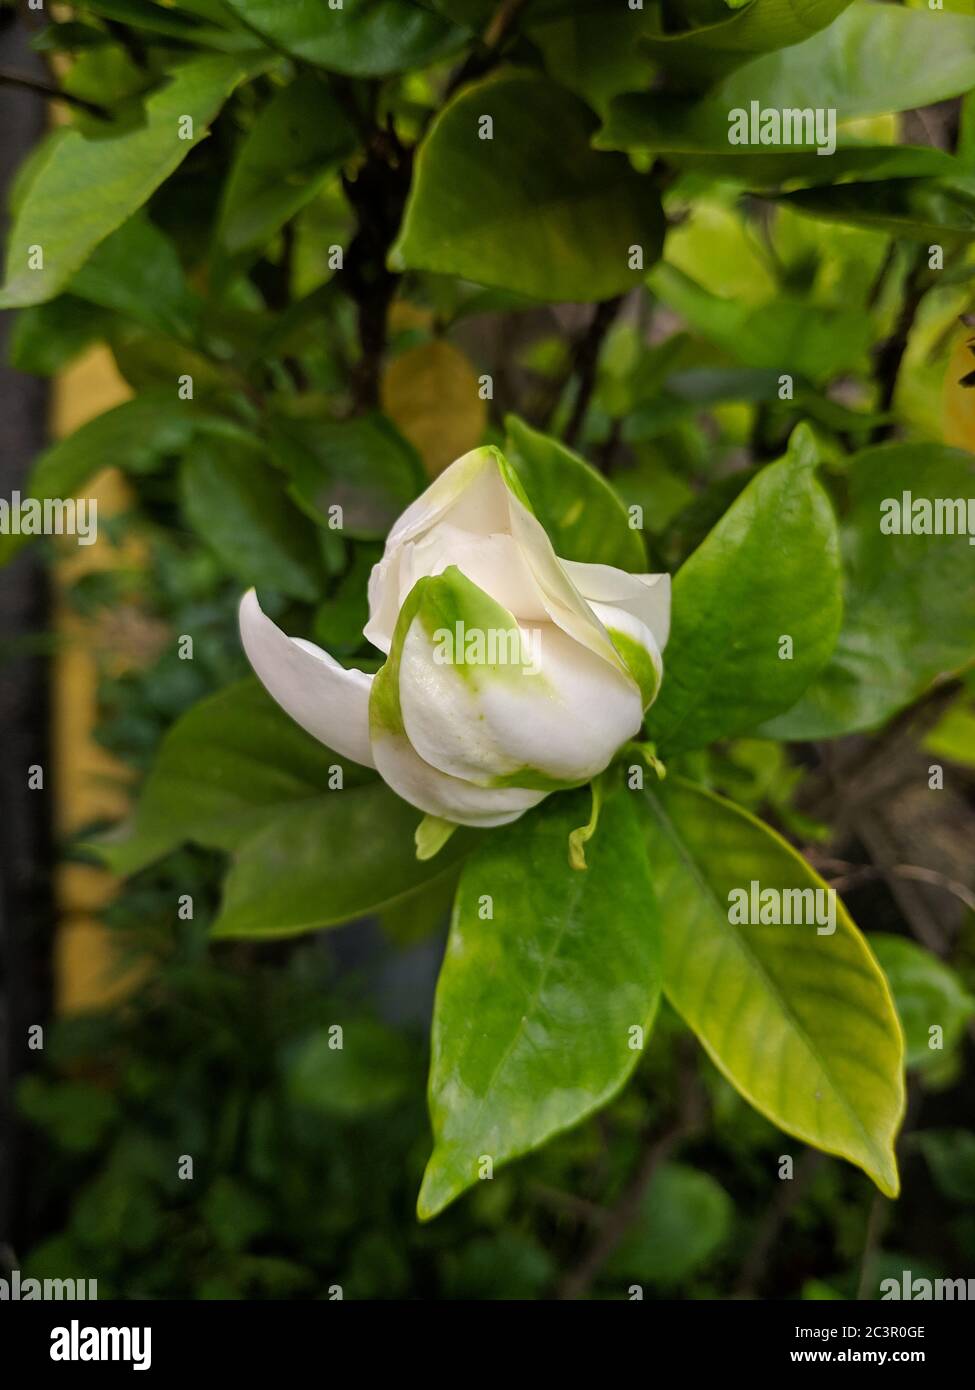 Gardenia petals hi-res stock photography and images - Alamy